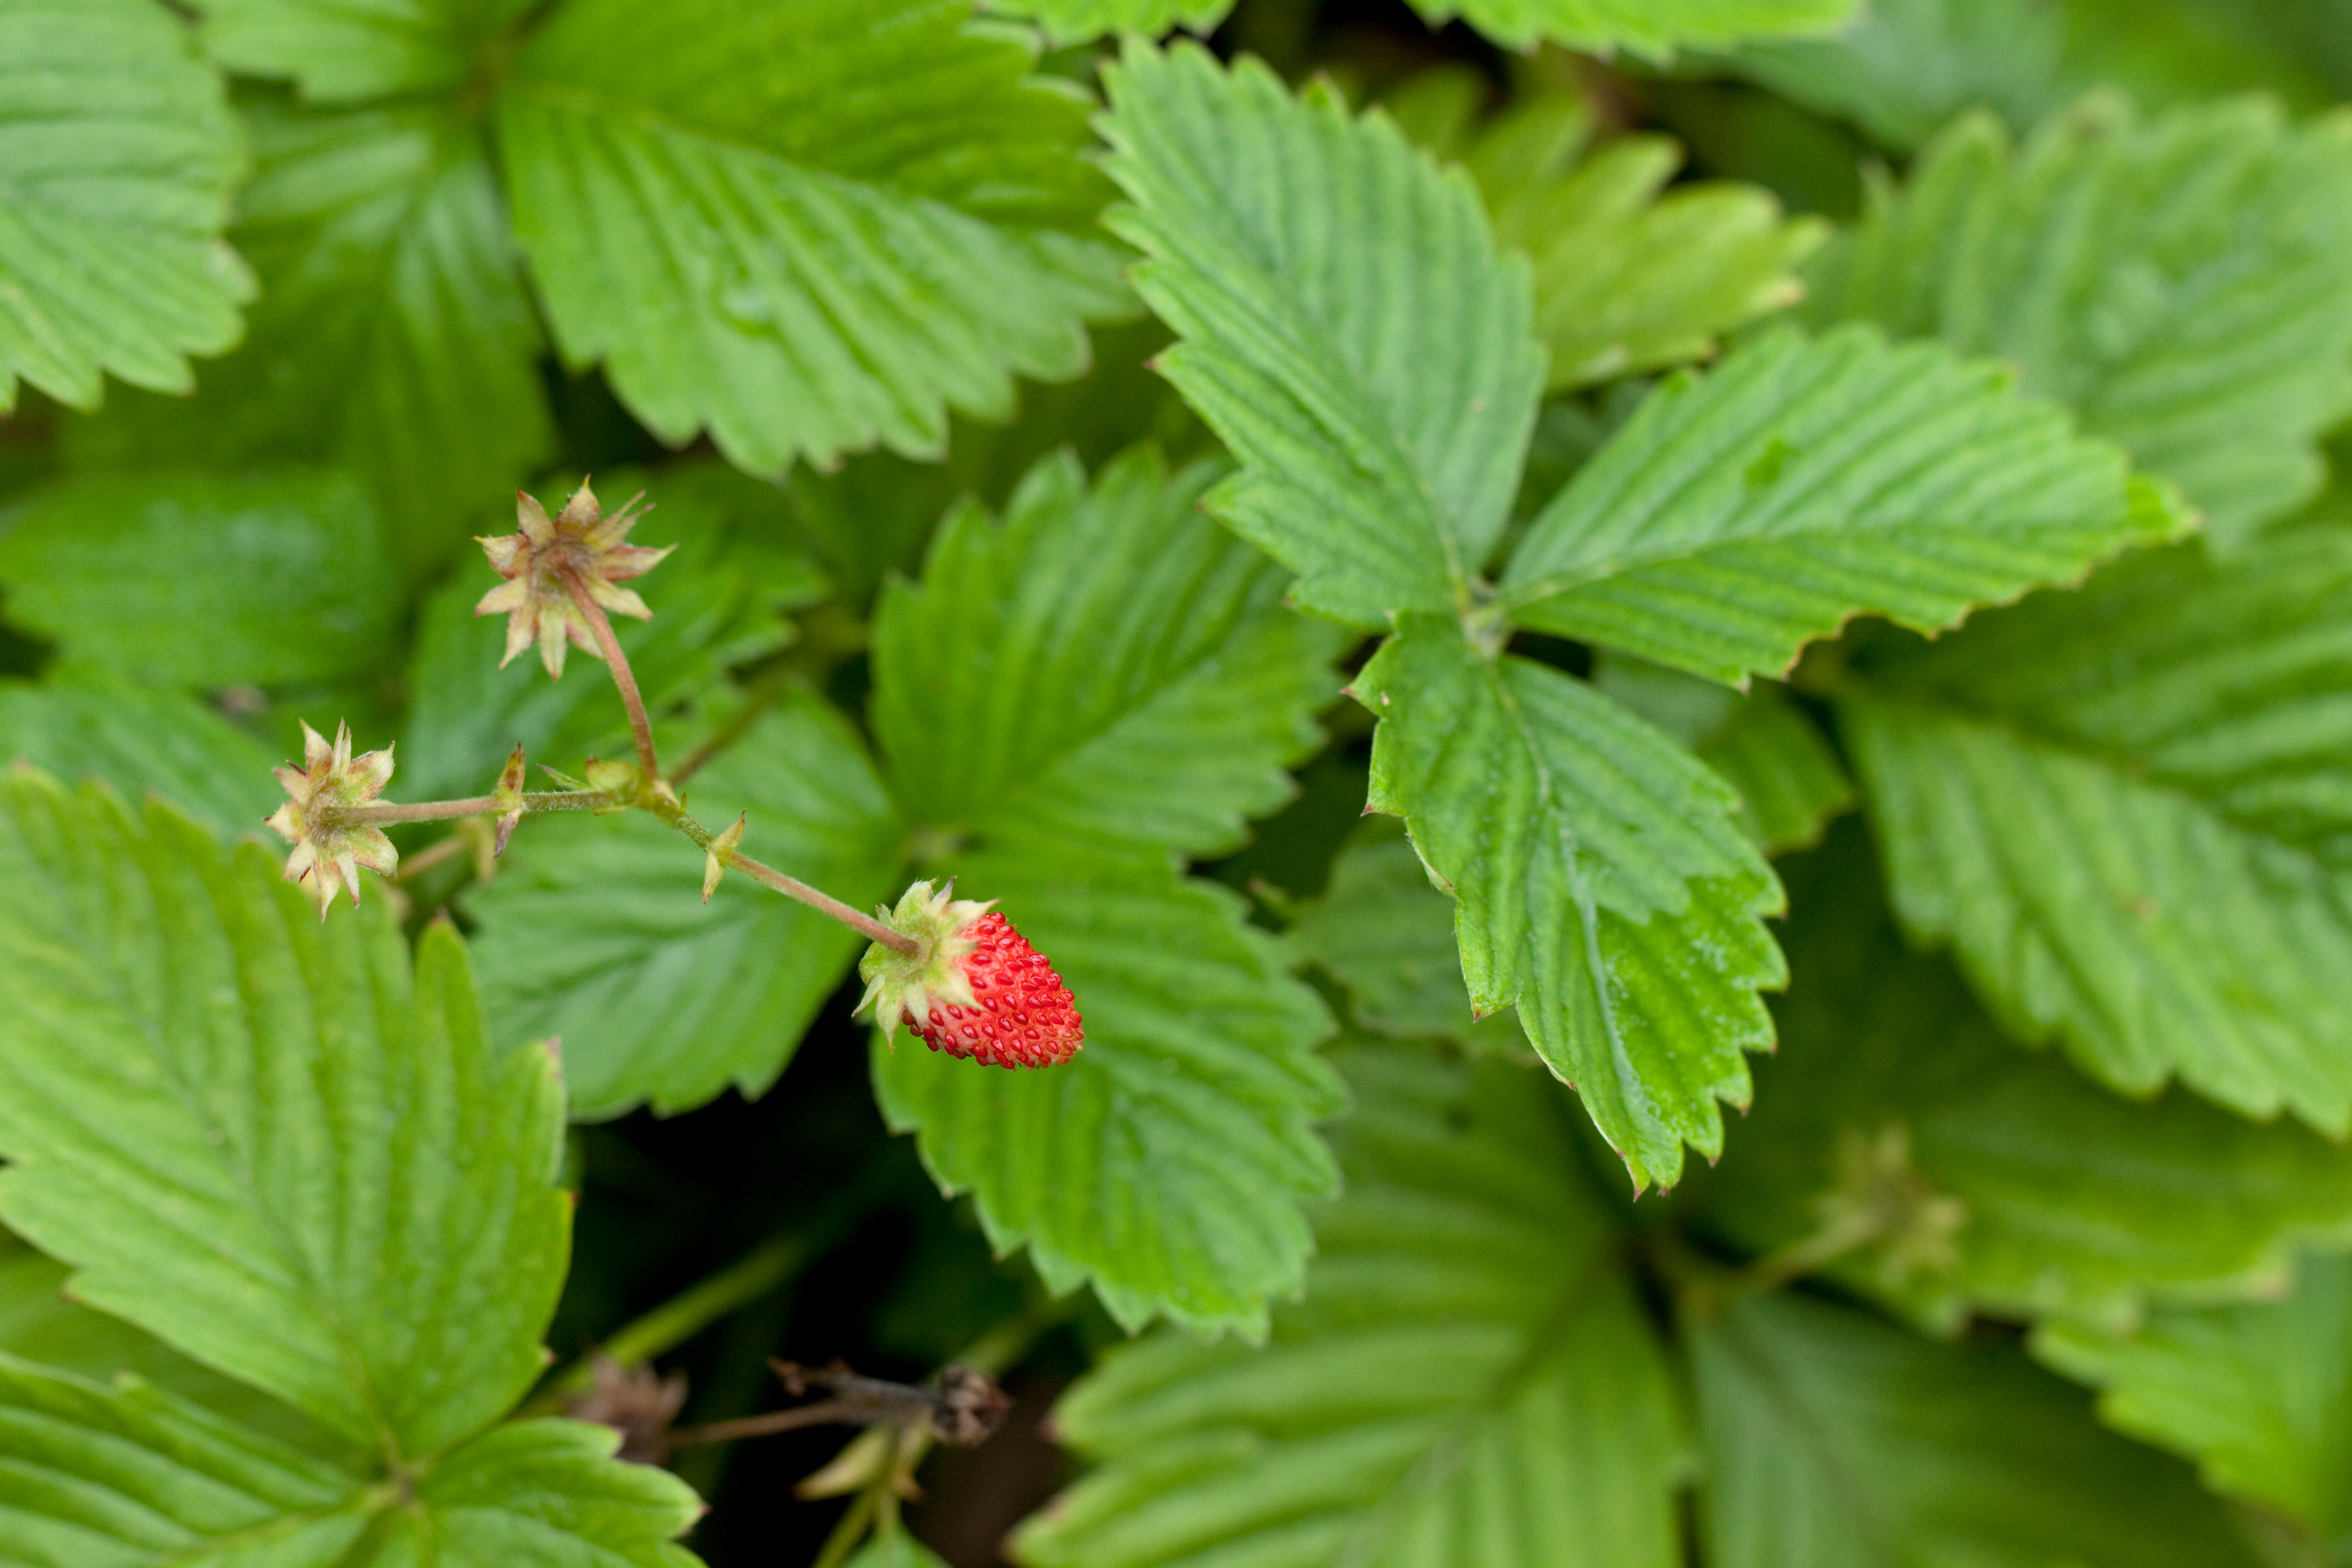 File:Leaves, Wild strawberry - Flickr - nekonomania.jpg - Wikimedia ...